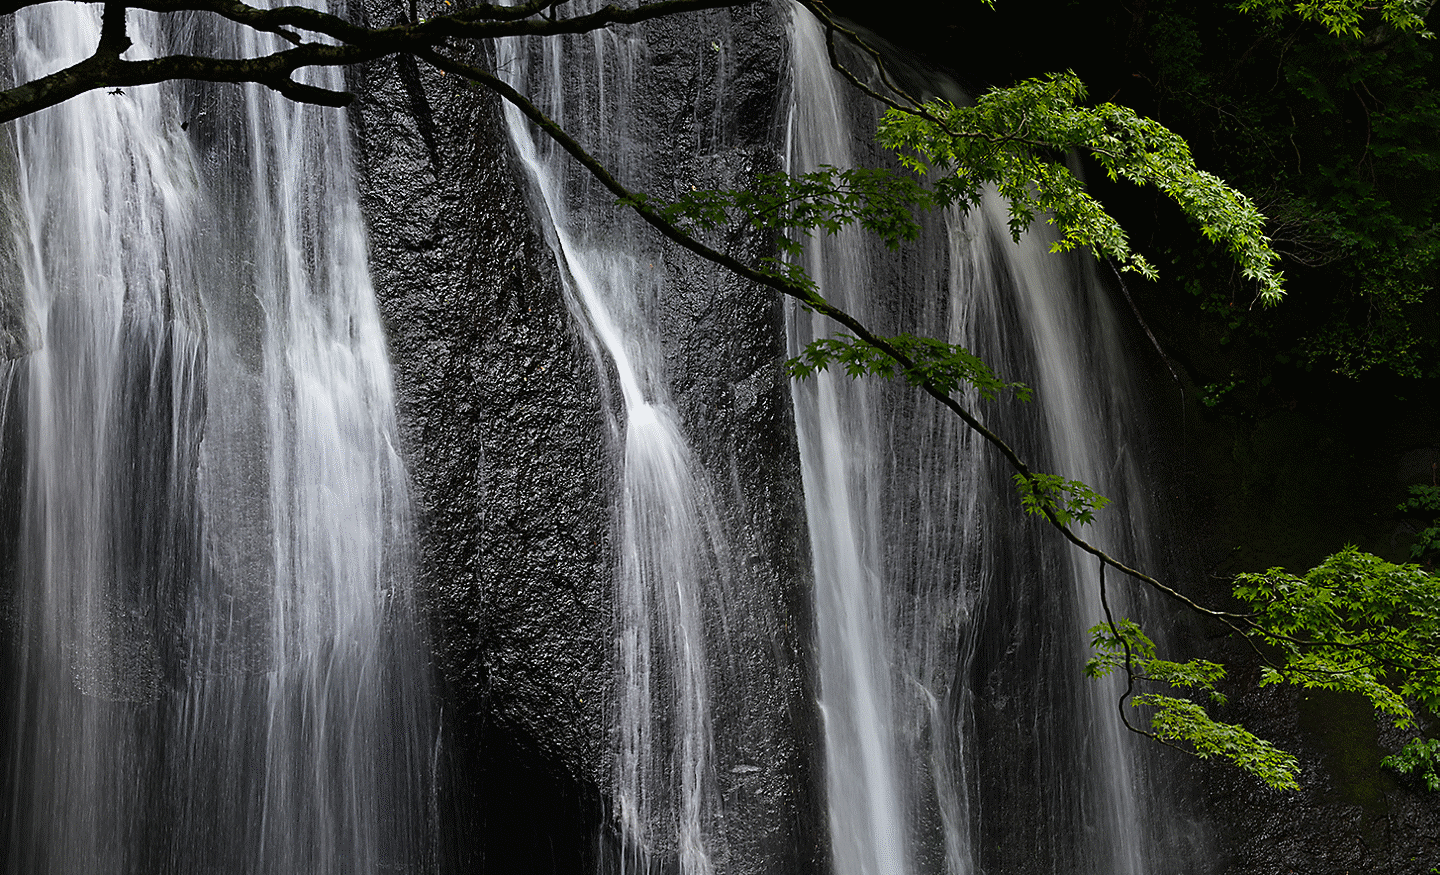 Slika vodopada i stabala